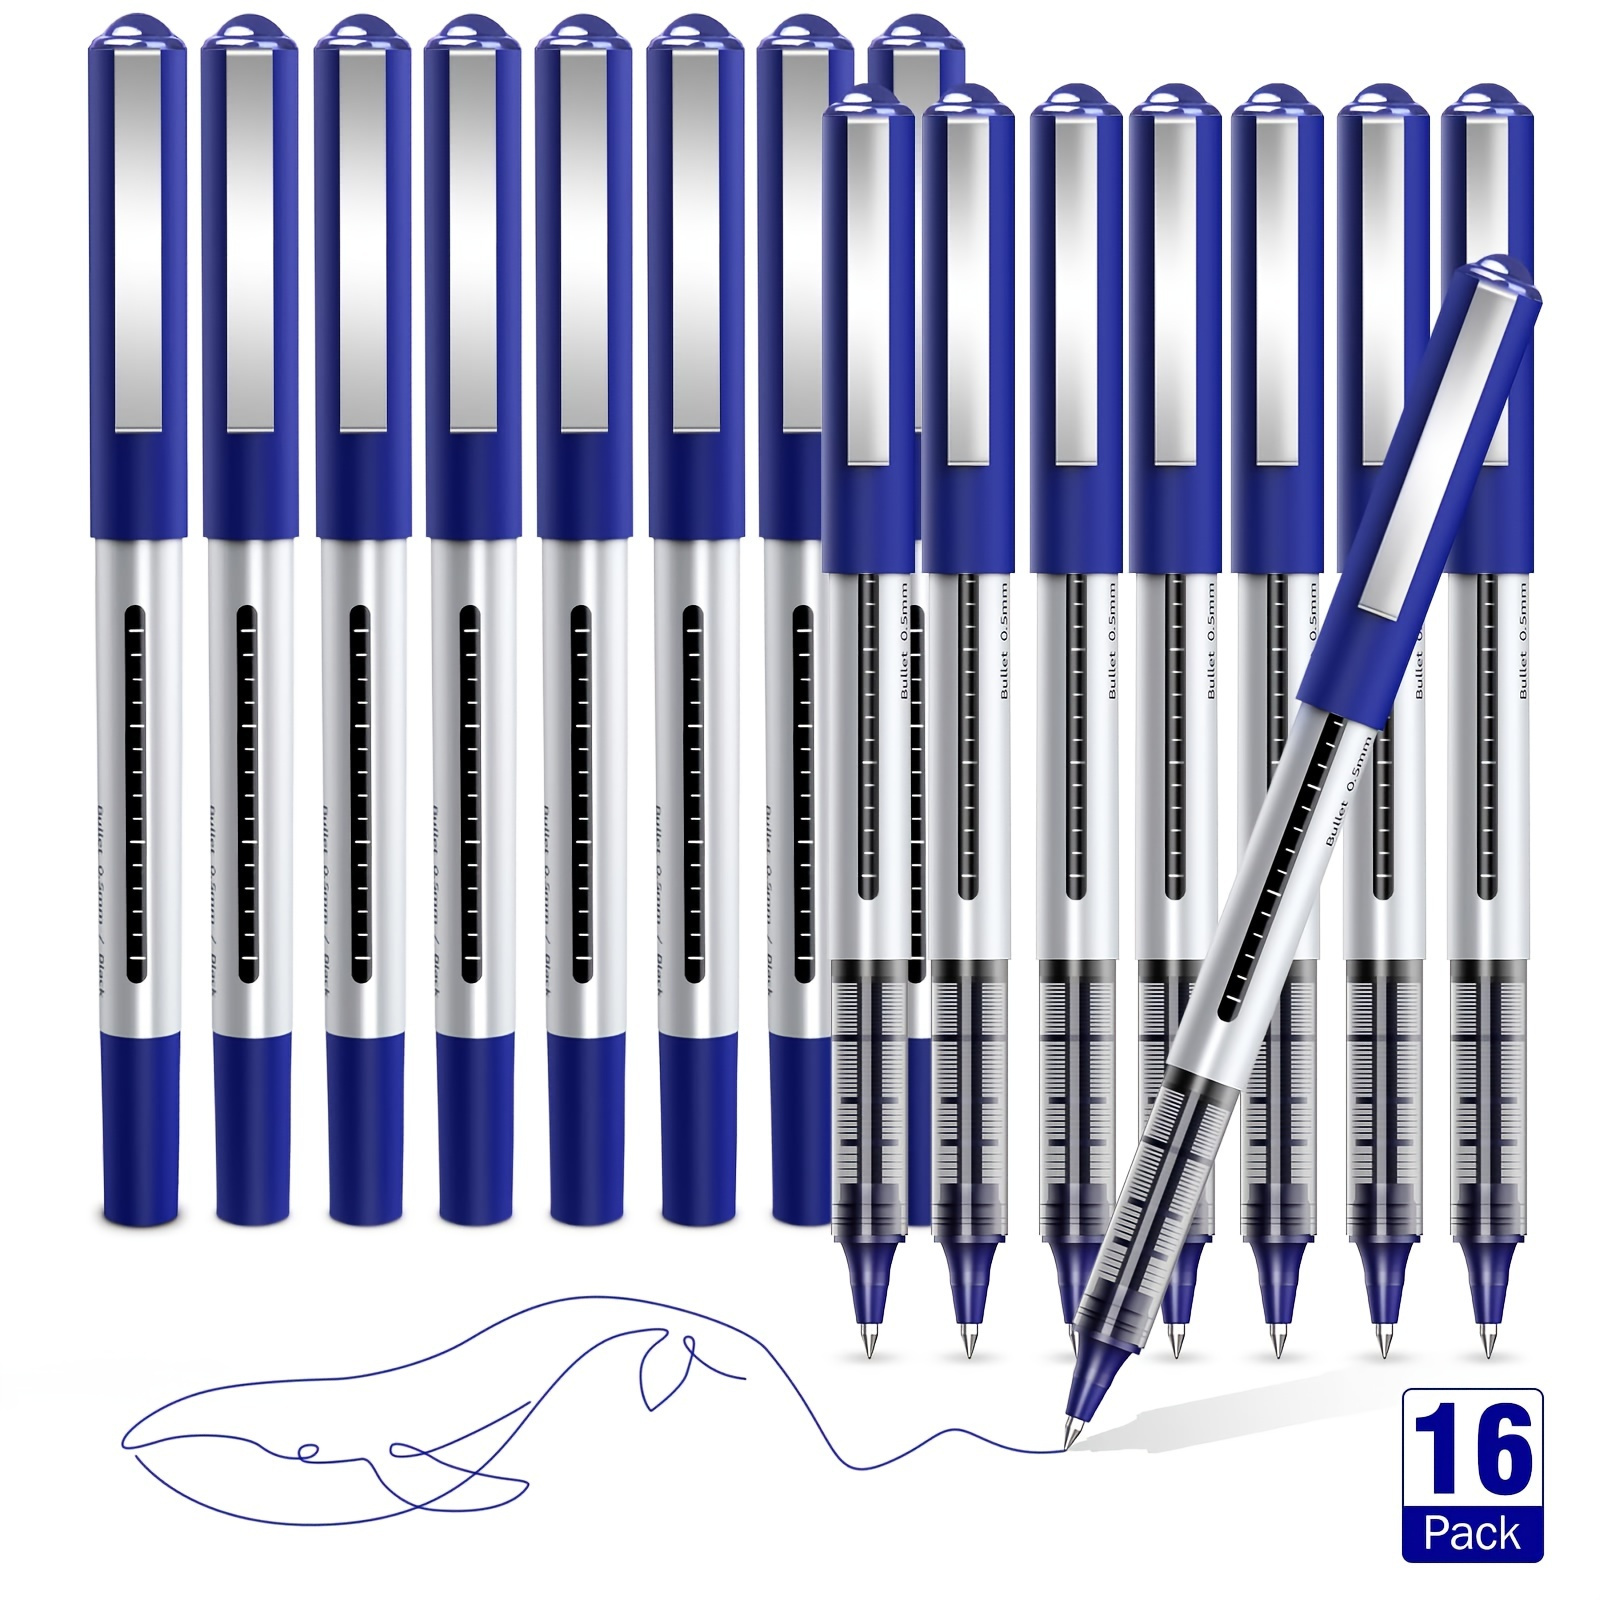 Pentel EnerGel-S 0.5mm Gel Ink Pen - Free Spirited Cat Pattern